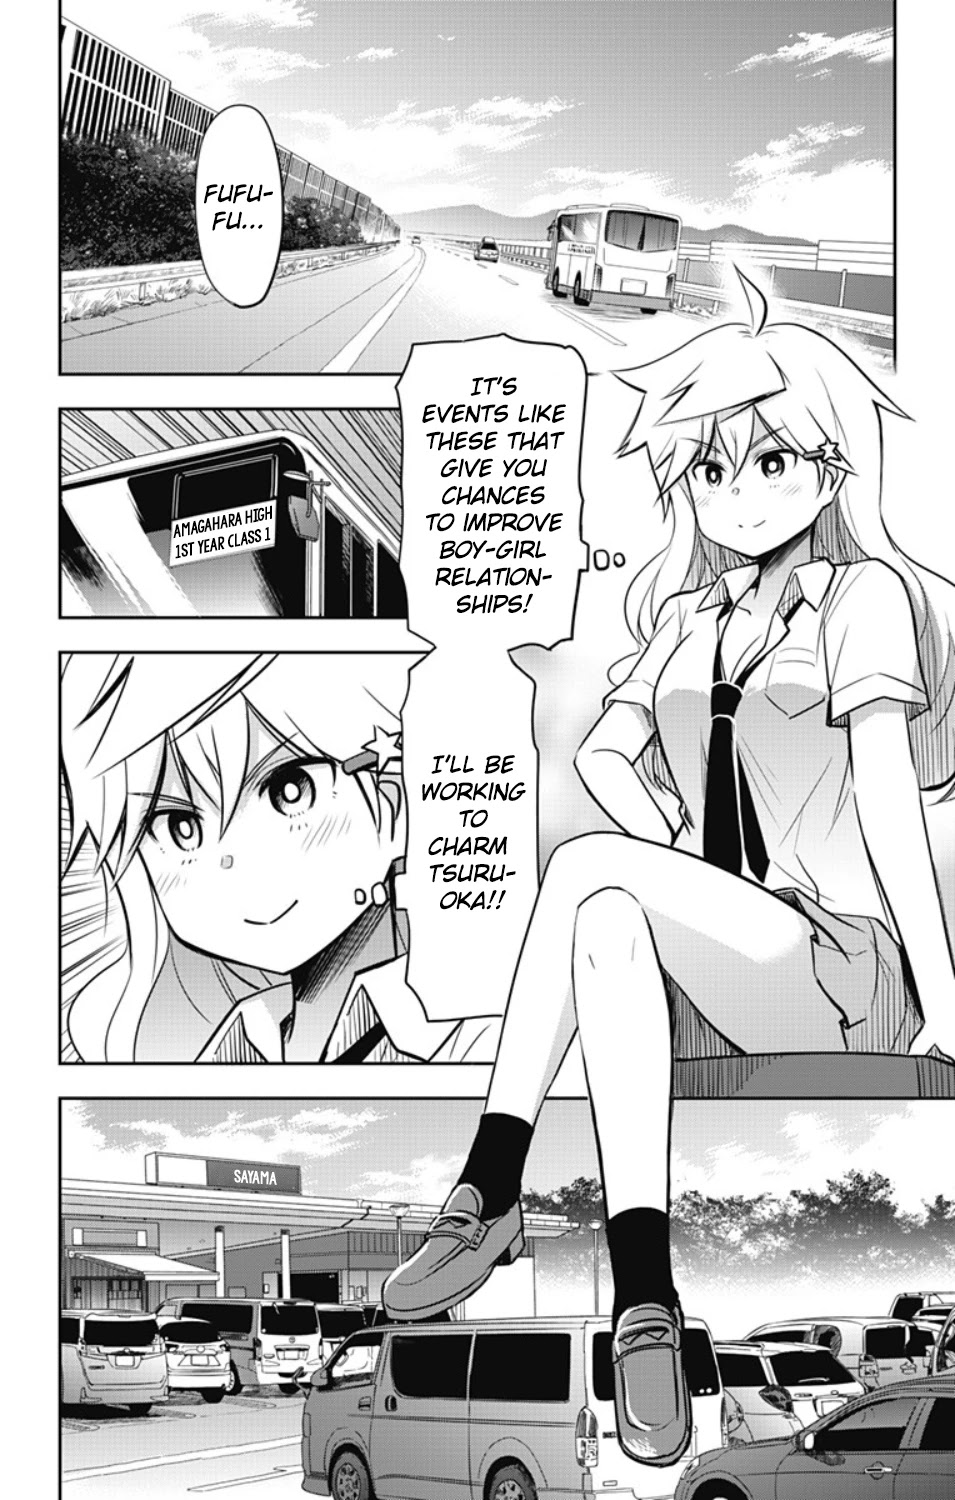 Yumizuka Iroha's No Good Without Her Procedure! - Page 3